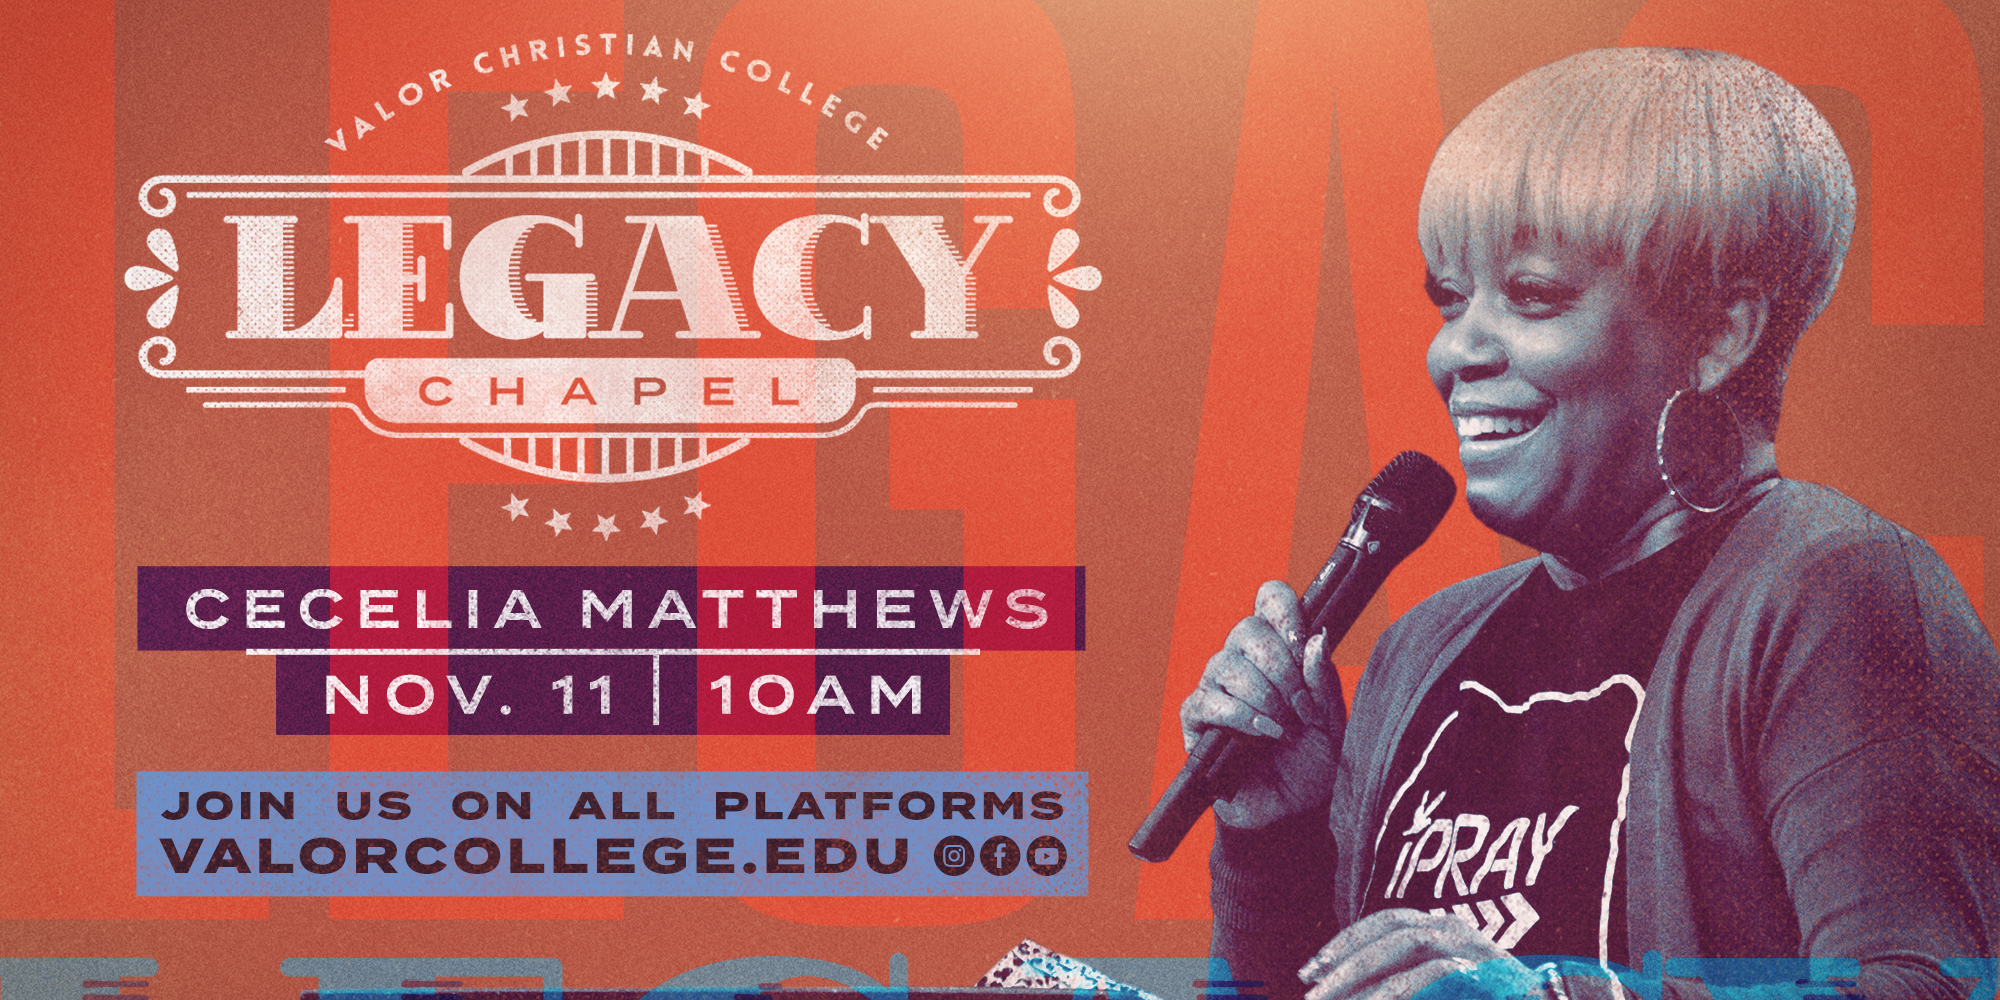 Valor Christian College Legacy Chapel Cecelia Matthews November 11th 10AM Join us on all platforms valorcollege.edu Instagram Facebook Youtube